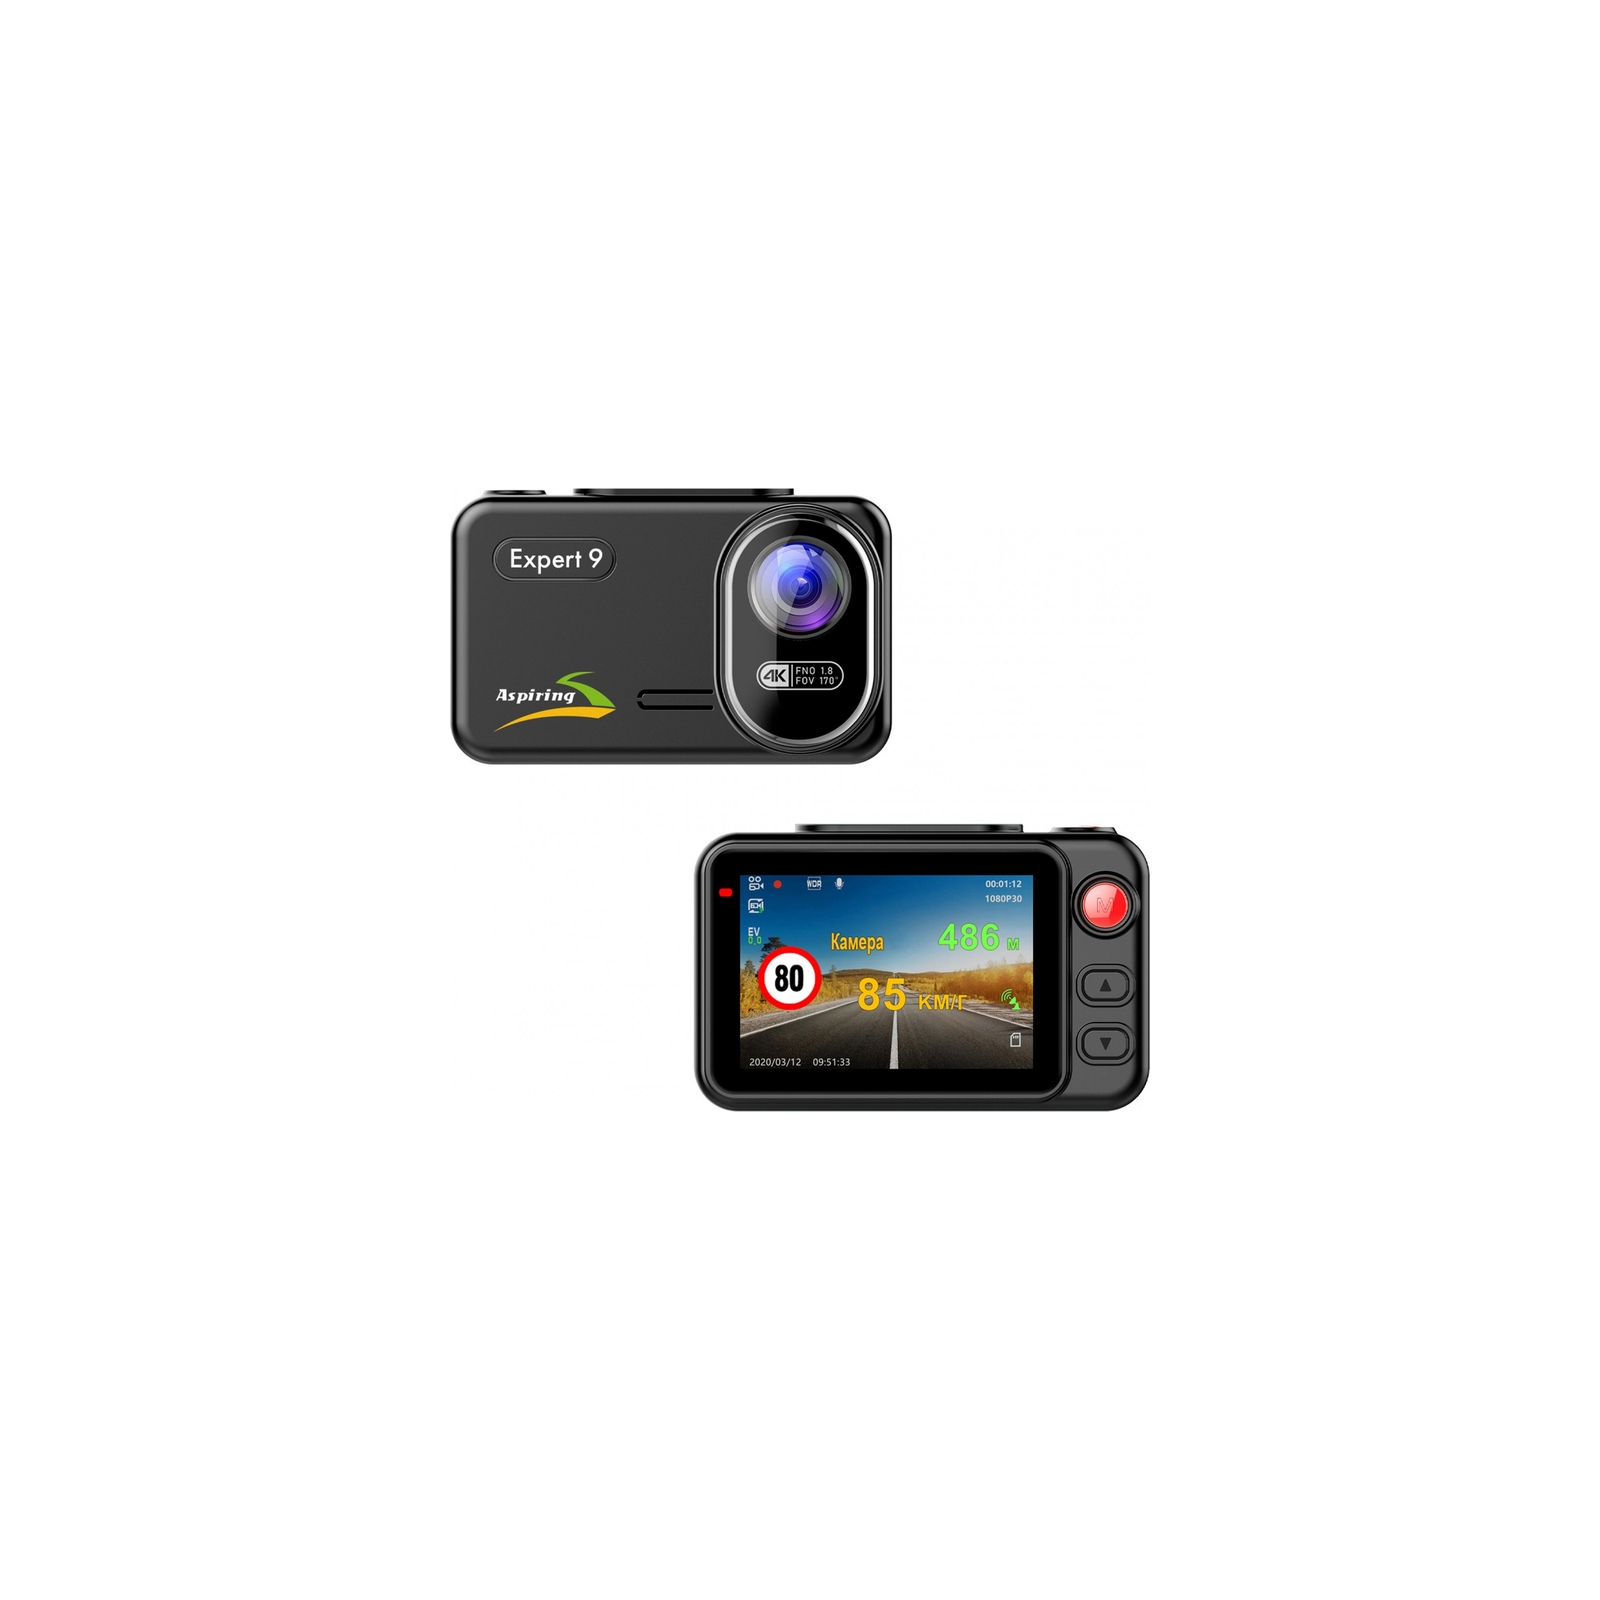 Відеореєстратор Aspiring Expert 9 Speedcam, WI-FI, GPS, 2K, 2 cameras (Aspiring Expert 9 Speedcam, WI-FI, GPS, 2K, 2 cameras) зображення 6